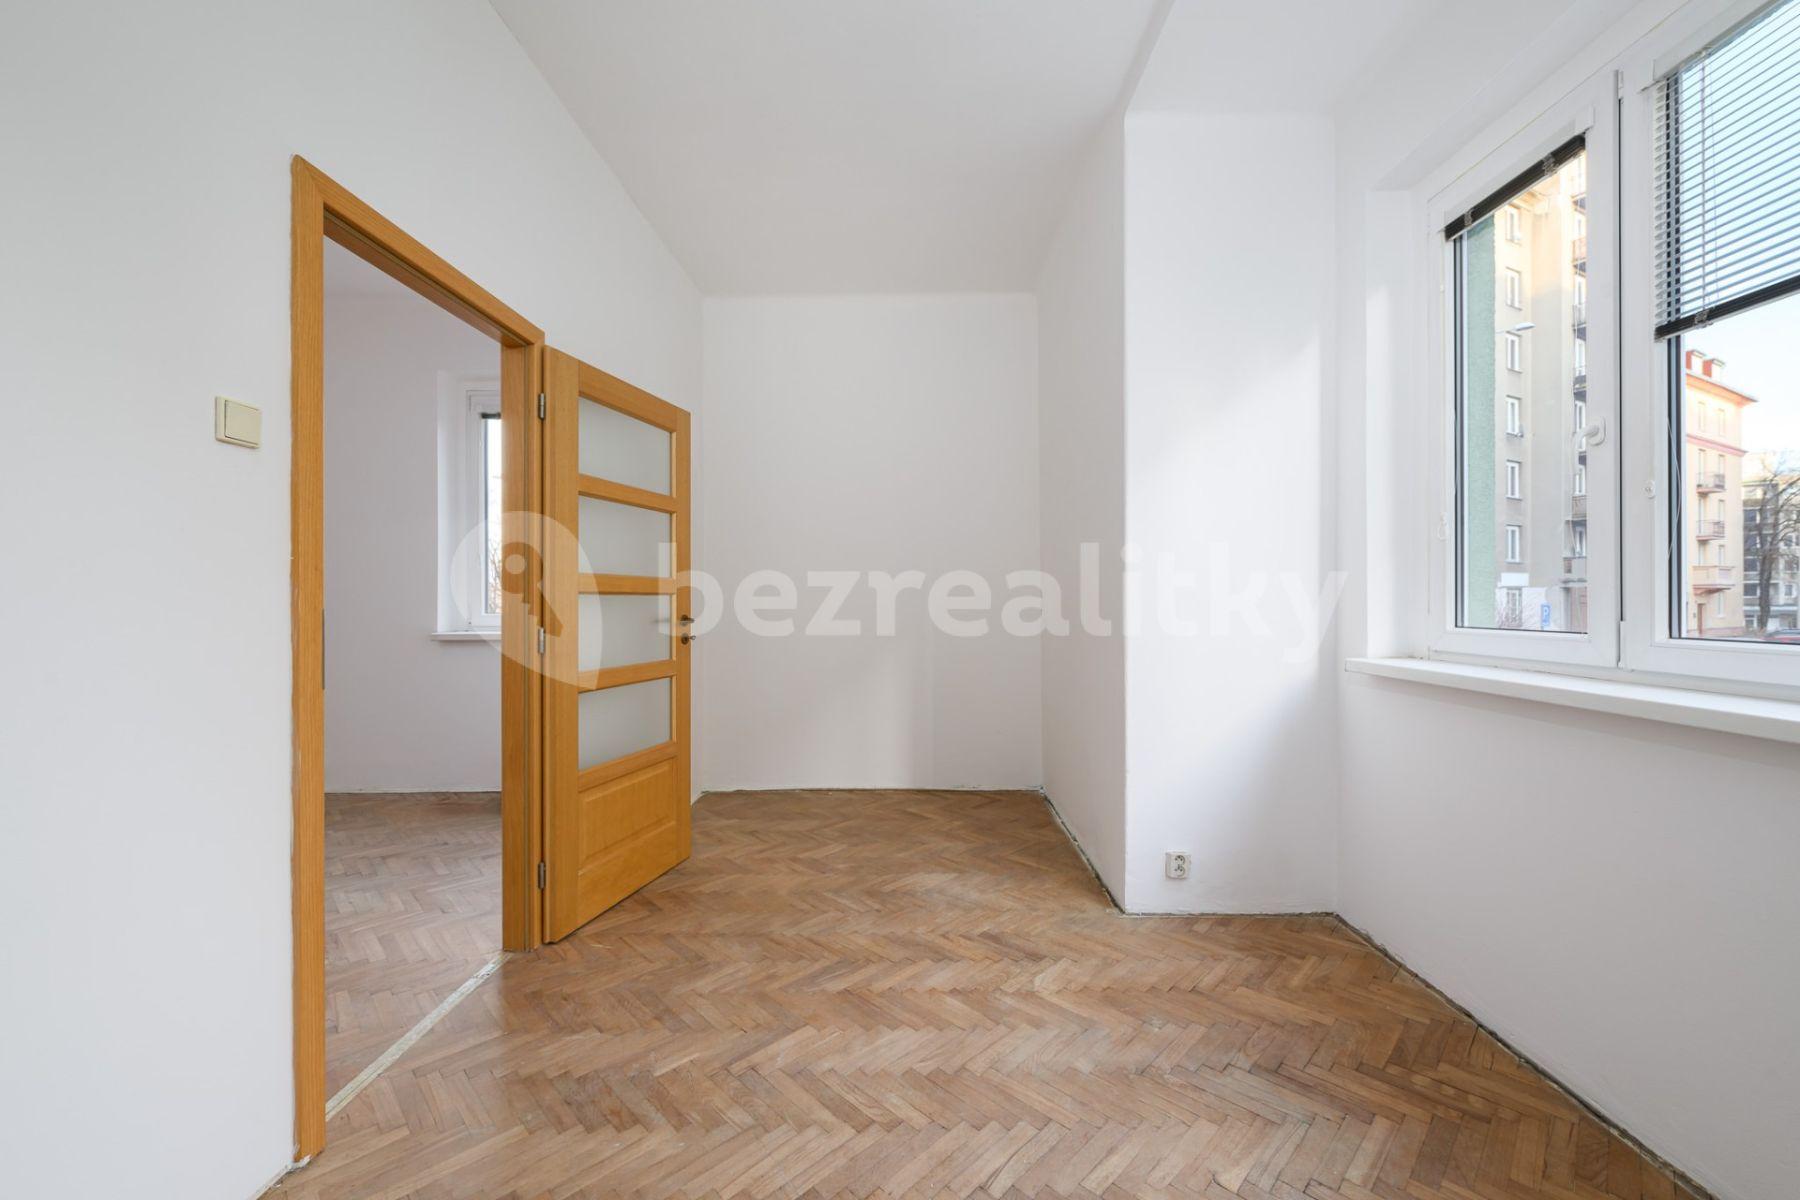 2 bedroom flat for sale, 57 m², Družstevní ochoz, Prague, Prague